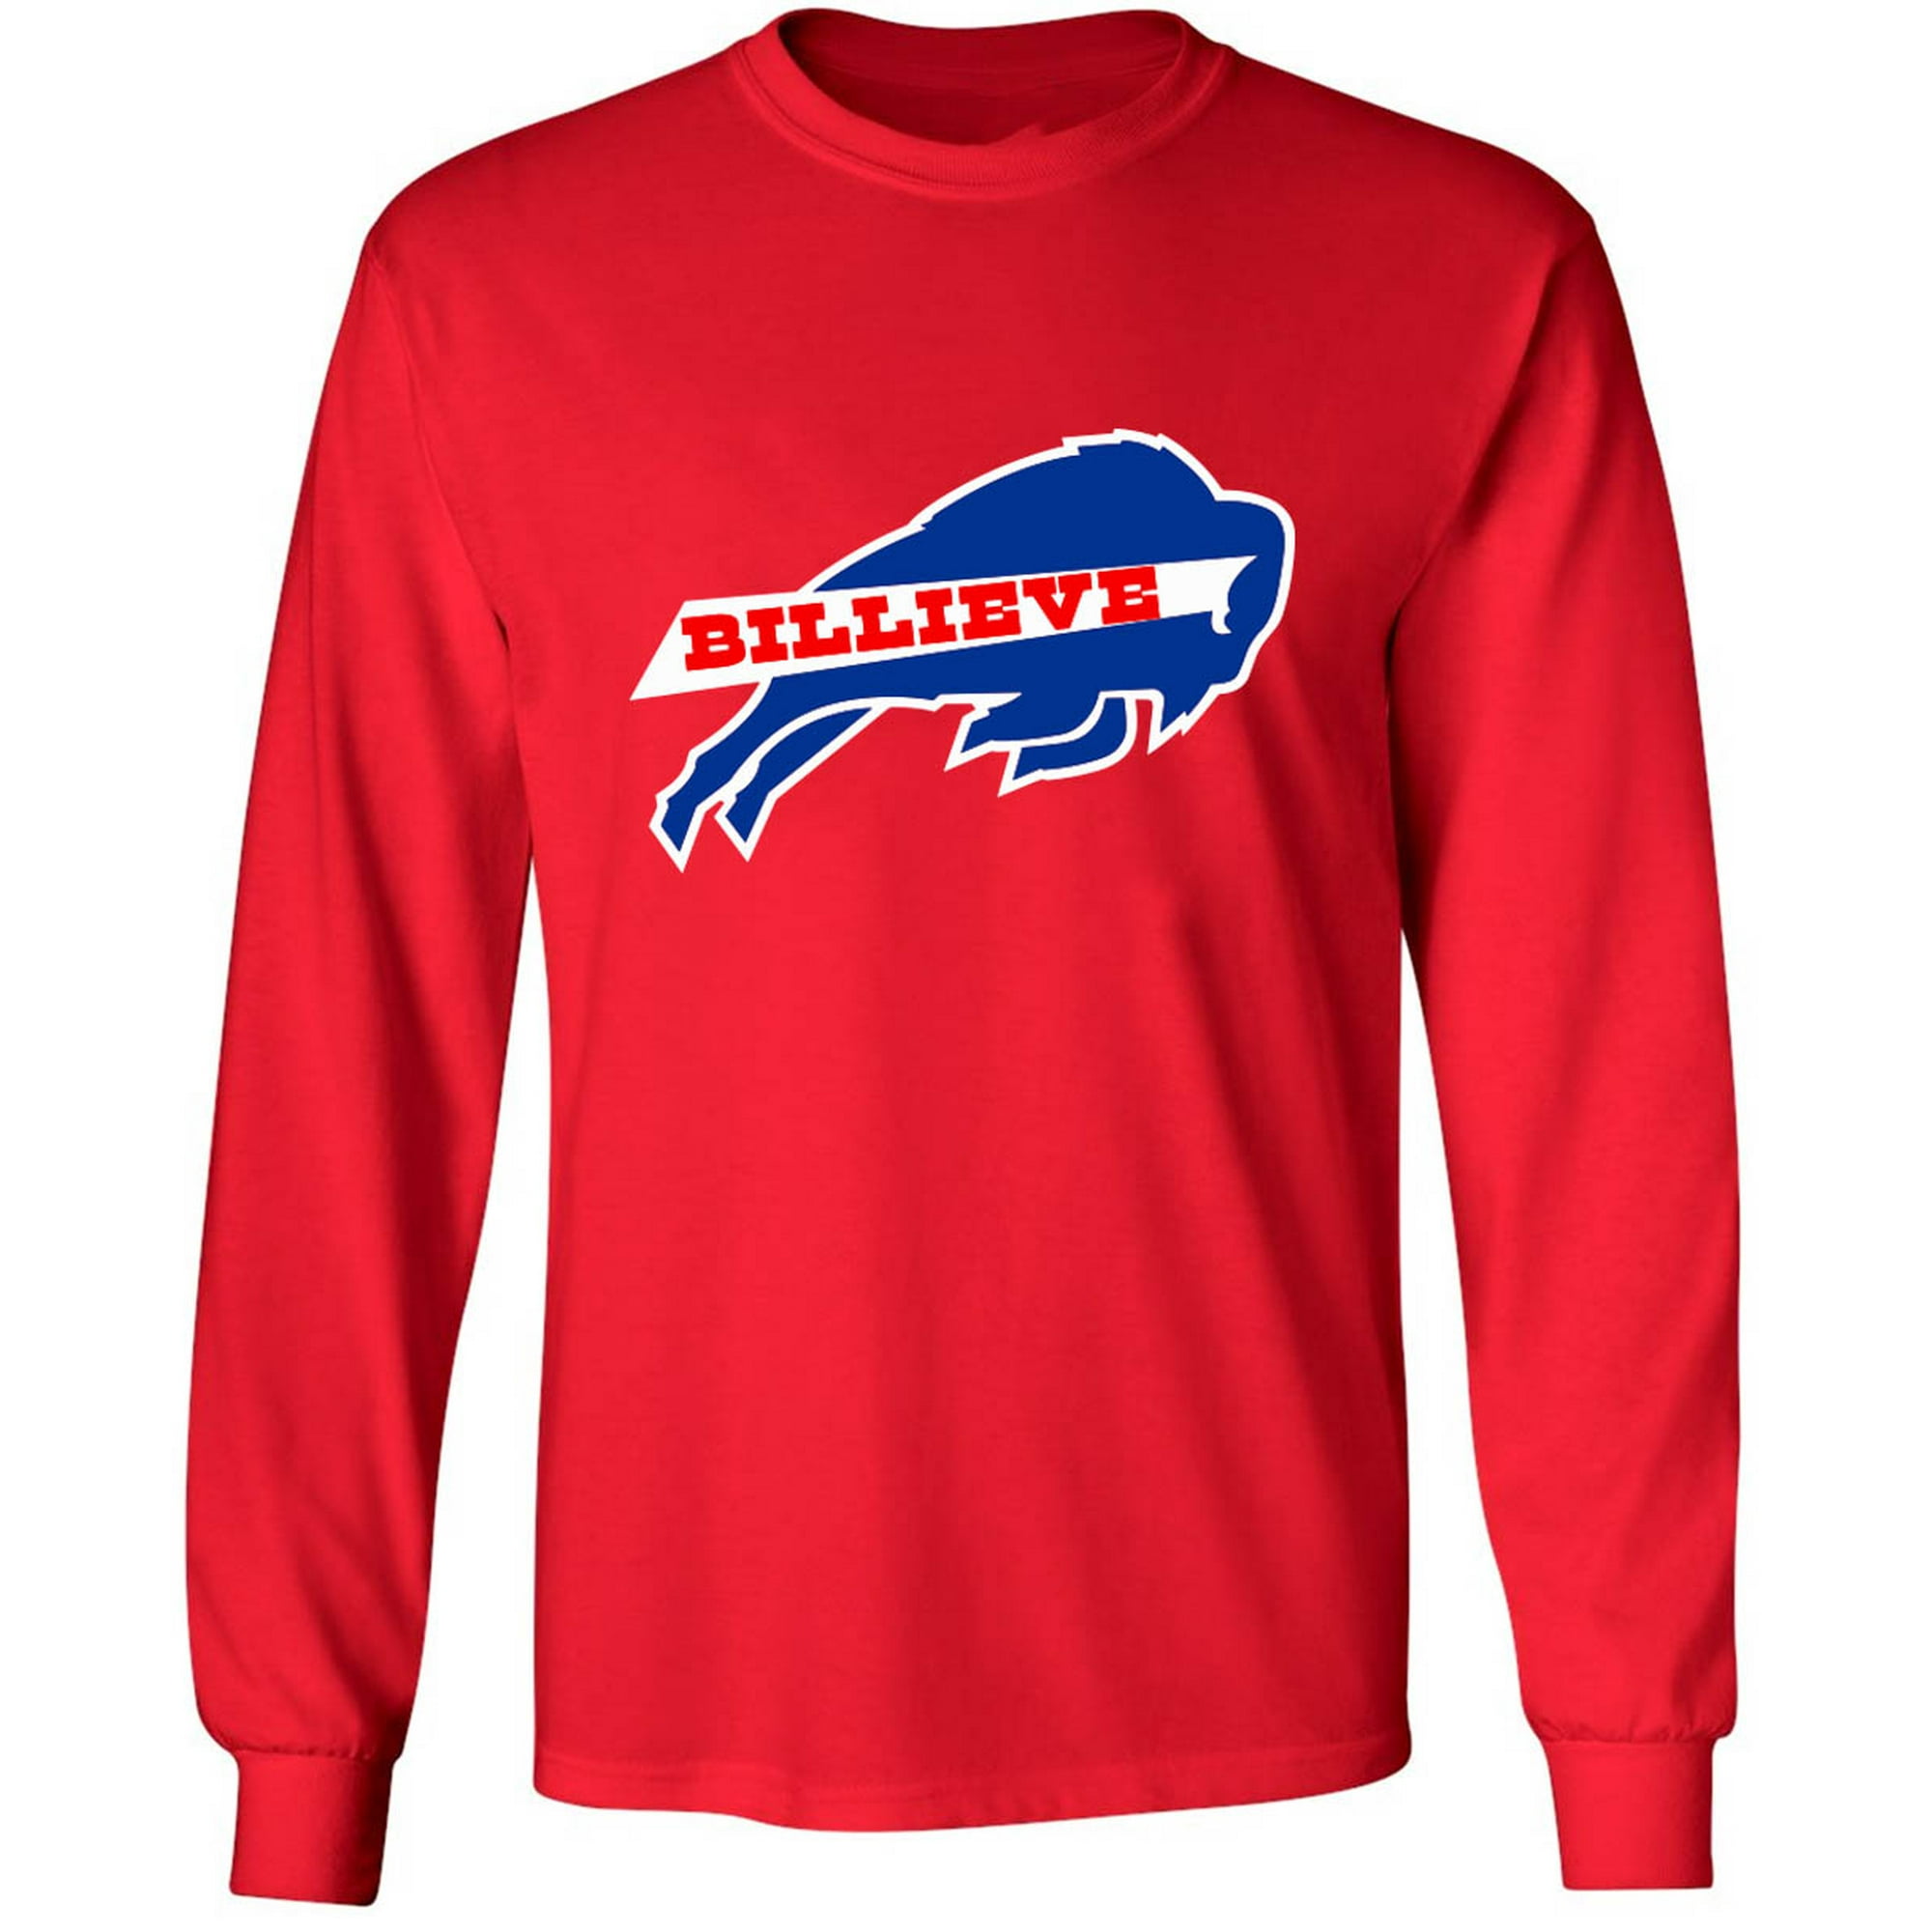 Shedd Shirts Long Sleeve Red Bills Billieve Josh Allen Stefon Diggs T-Shirt Youth XL, Boy's, Size: Youth XL(18-20)